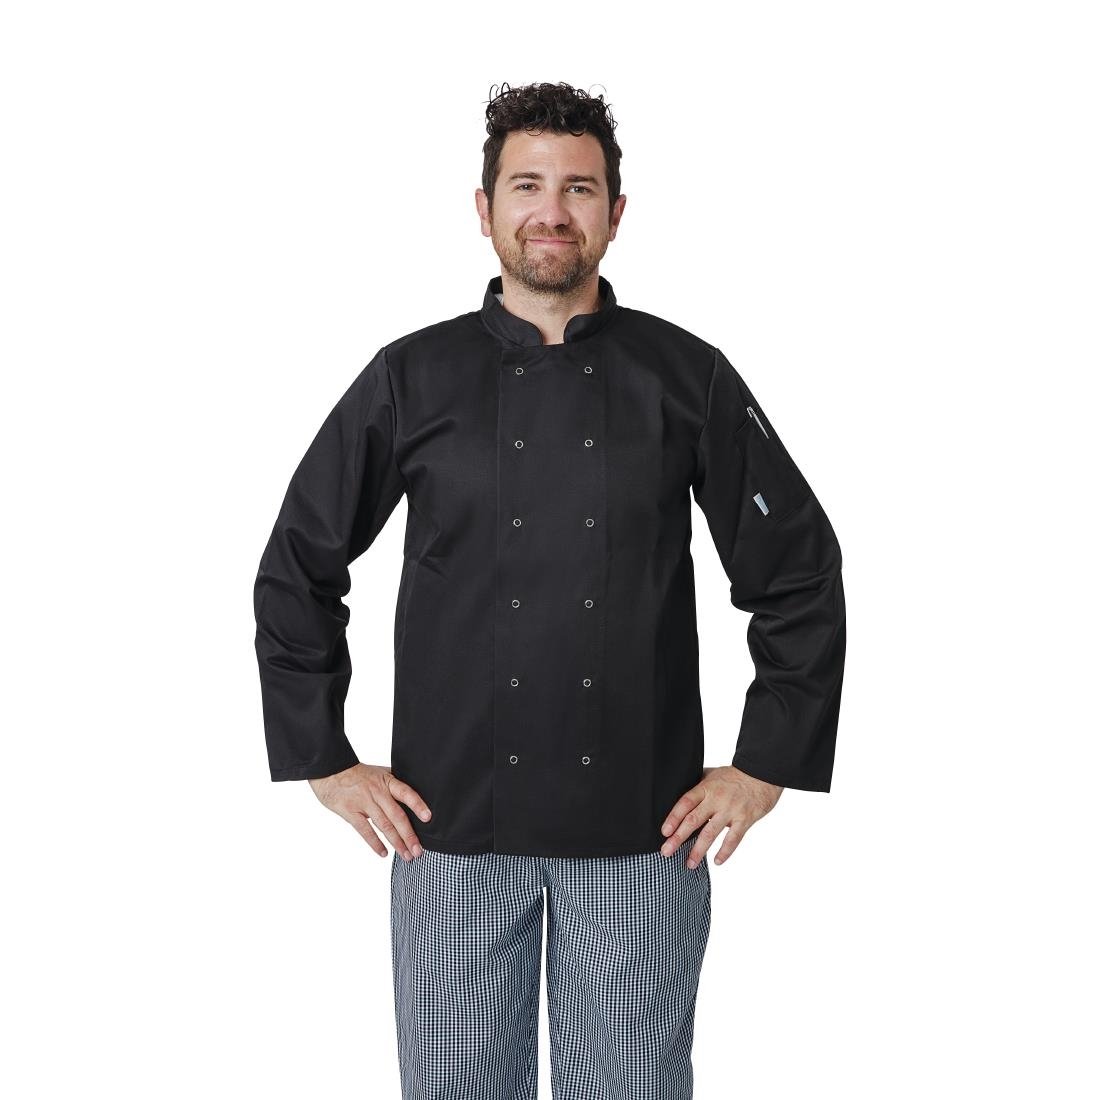 A438-M Whites Vegas Unisex Chefs Jacket Long Sleeve Black M JD Catering Equipment Solutions Ltd